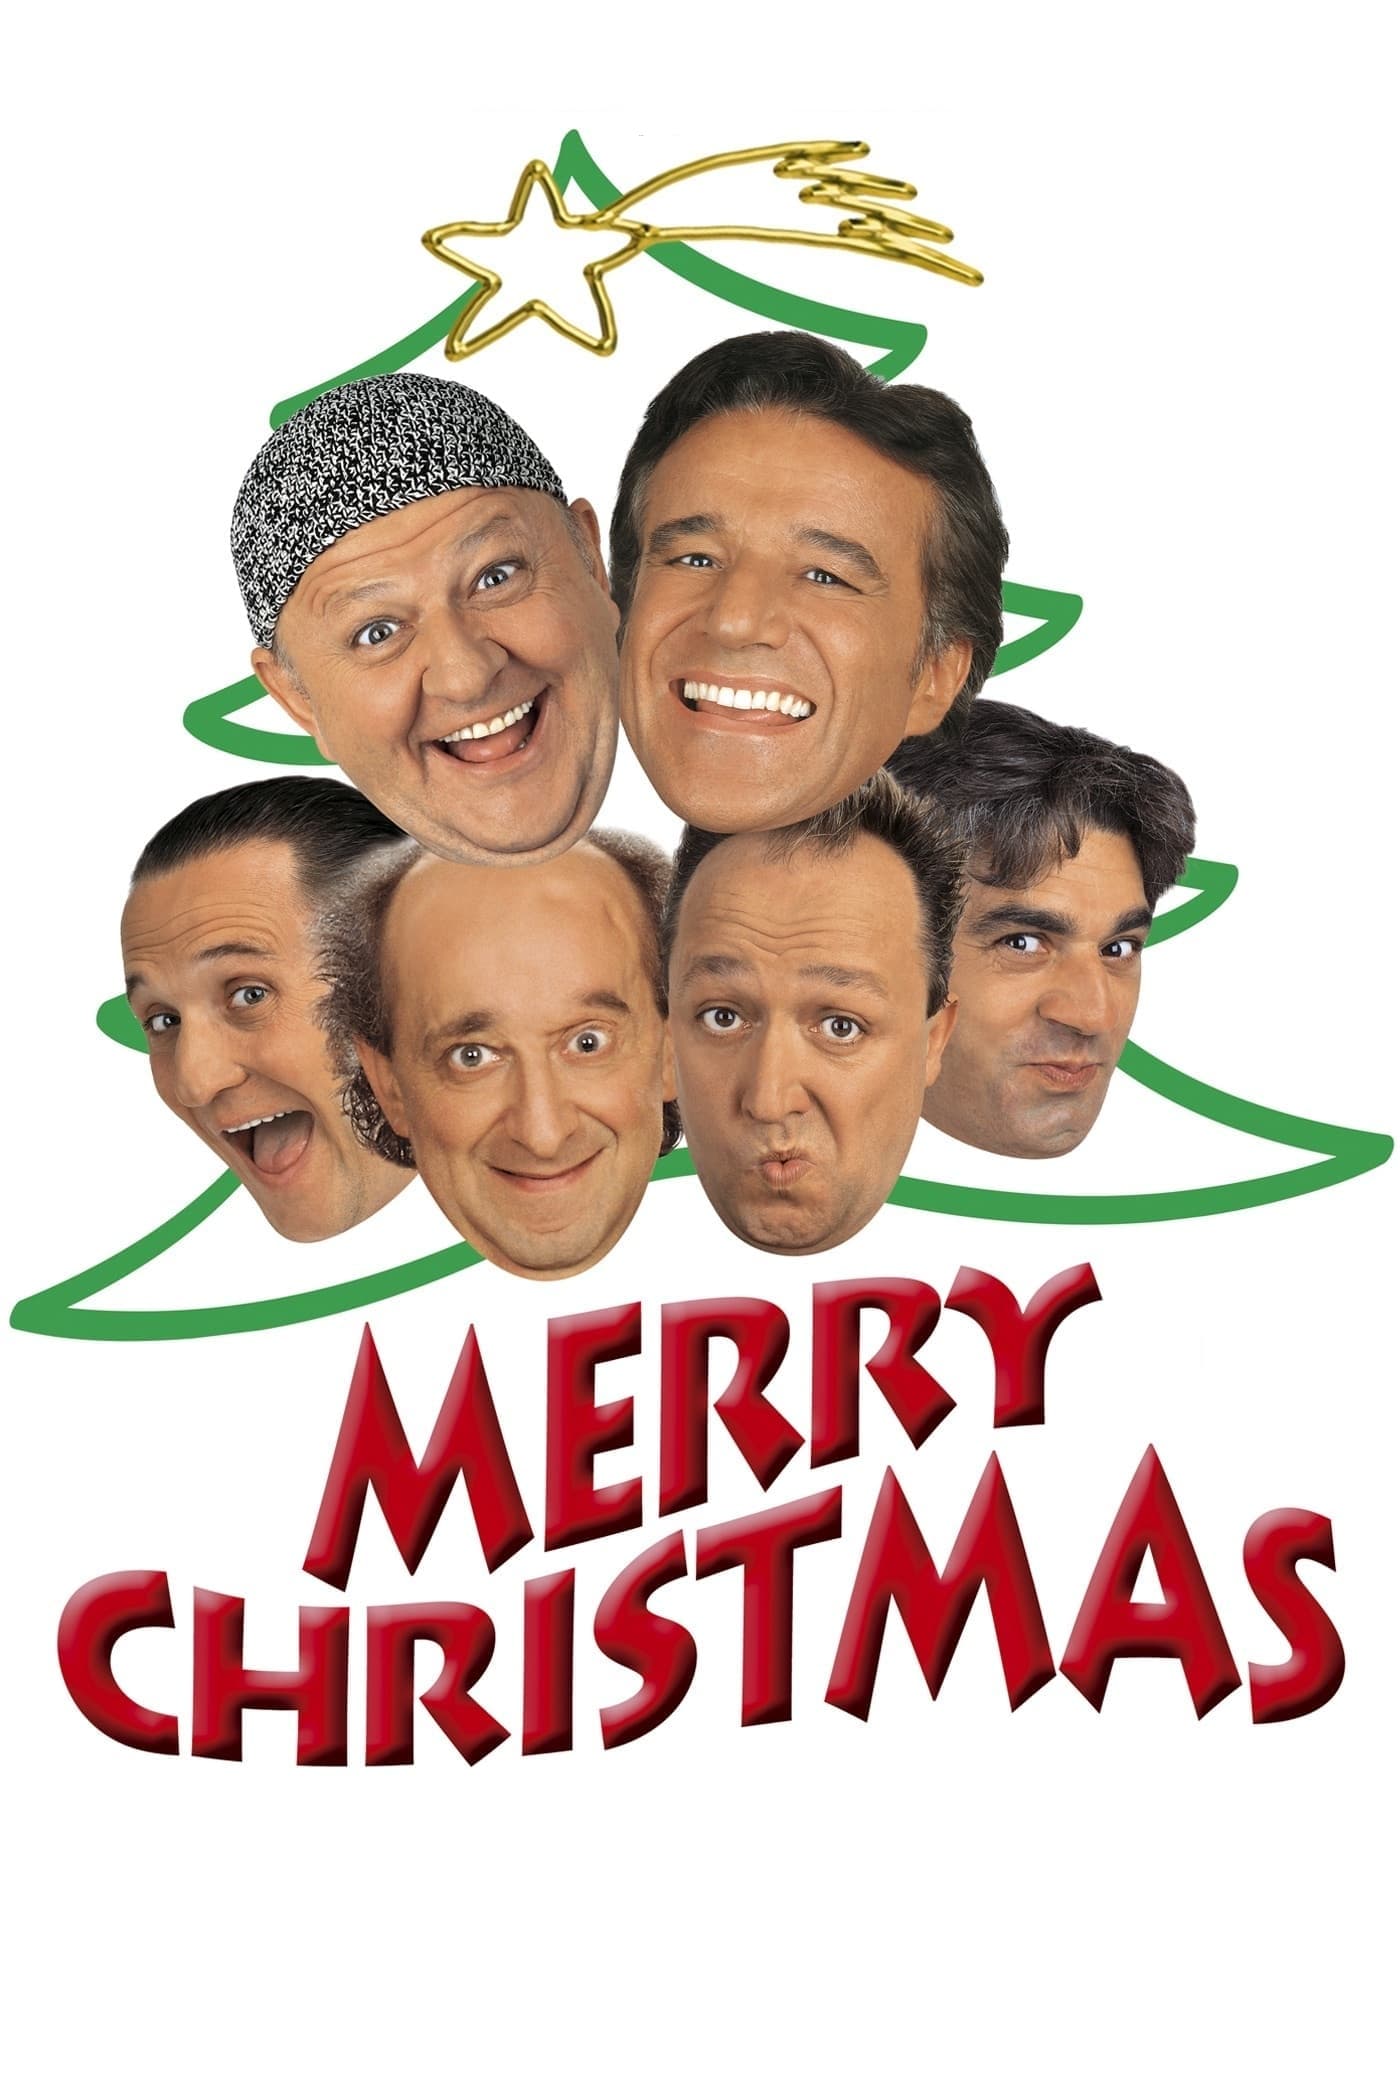 Merry Christmas (2001)